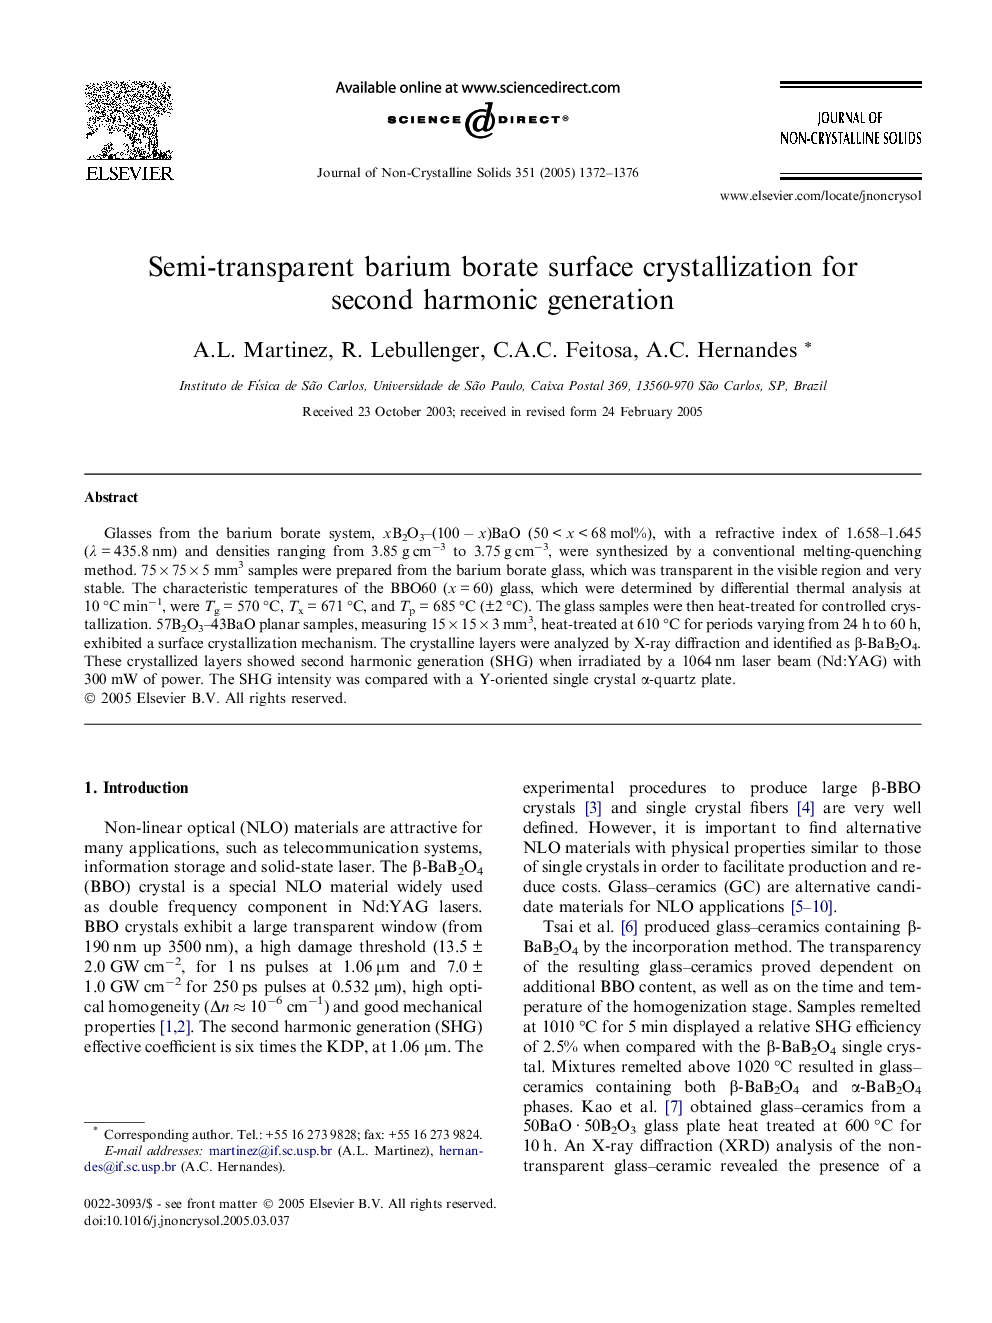 Semi-transparent barium borate surface crystallization for second harmonic generation